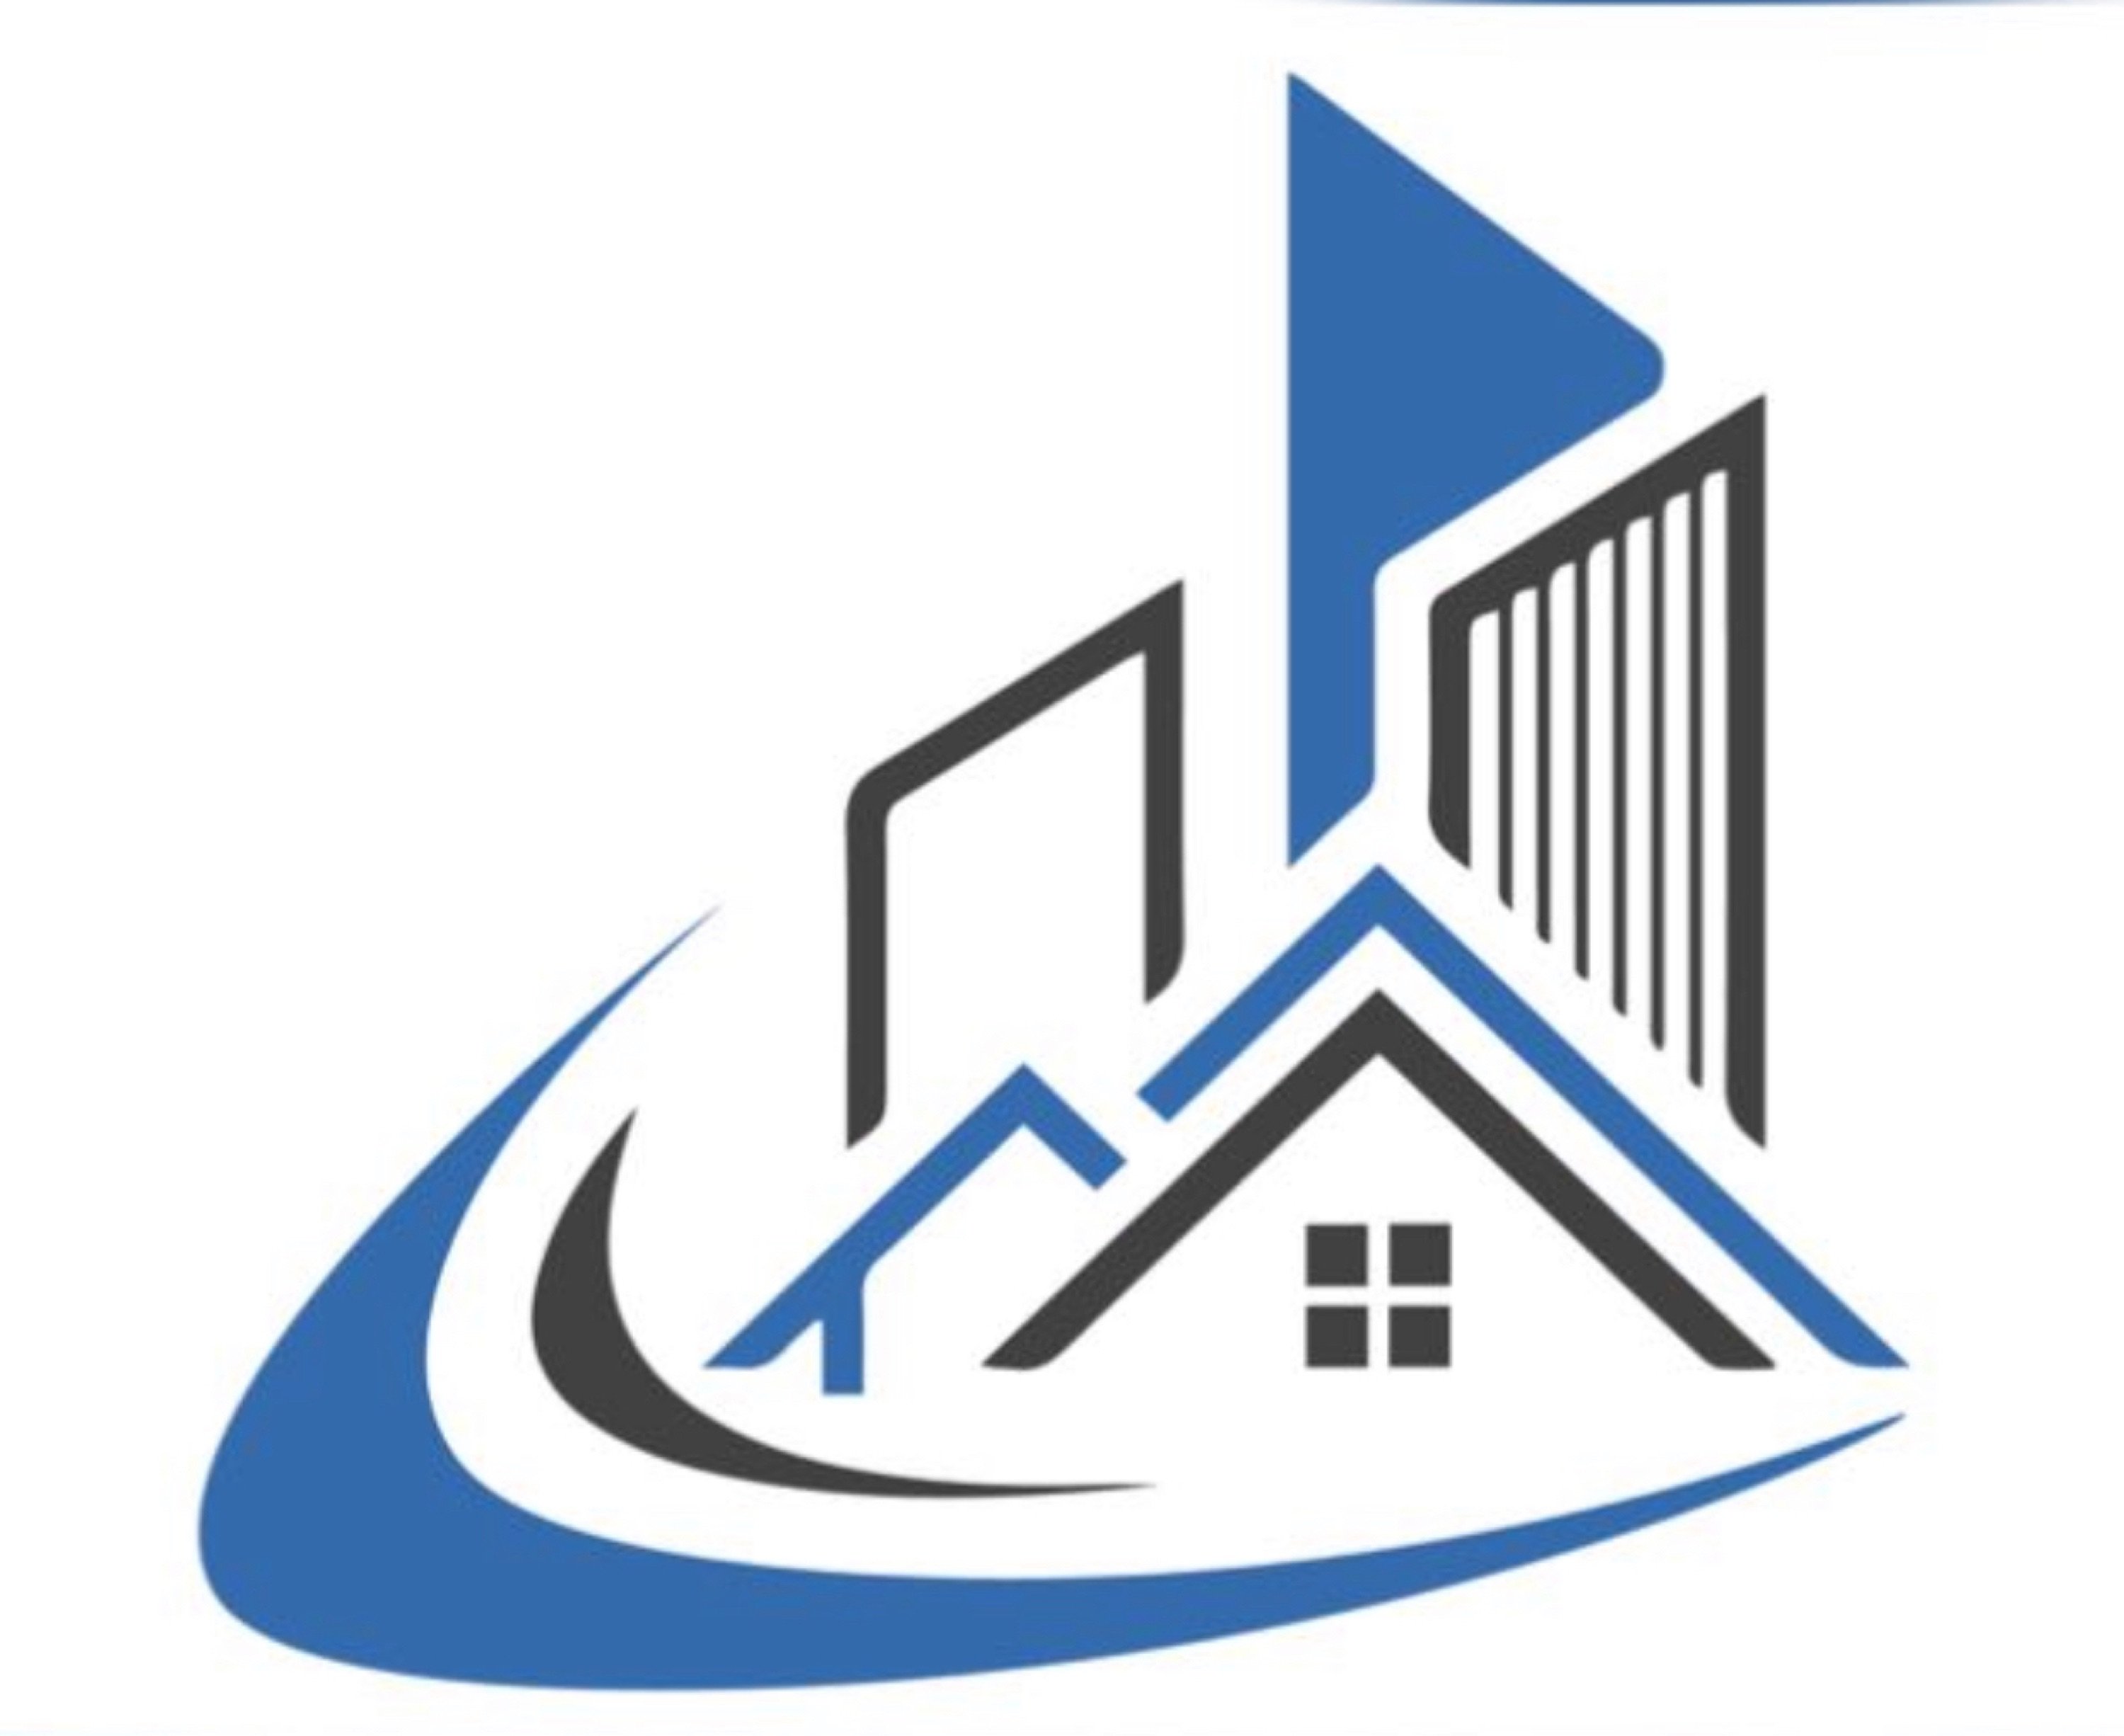 Bayside Builders Group Logo